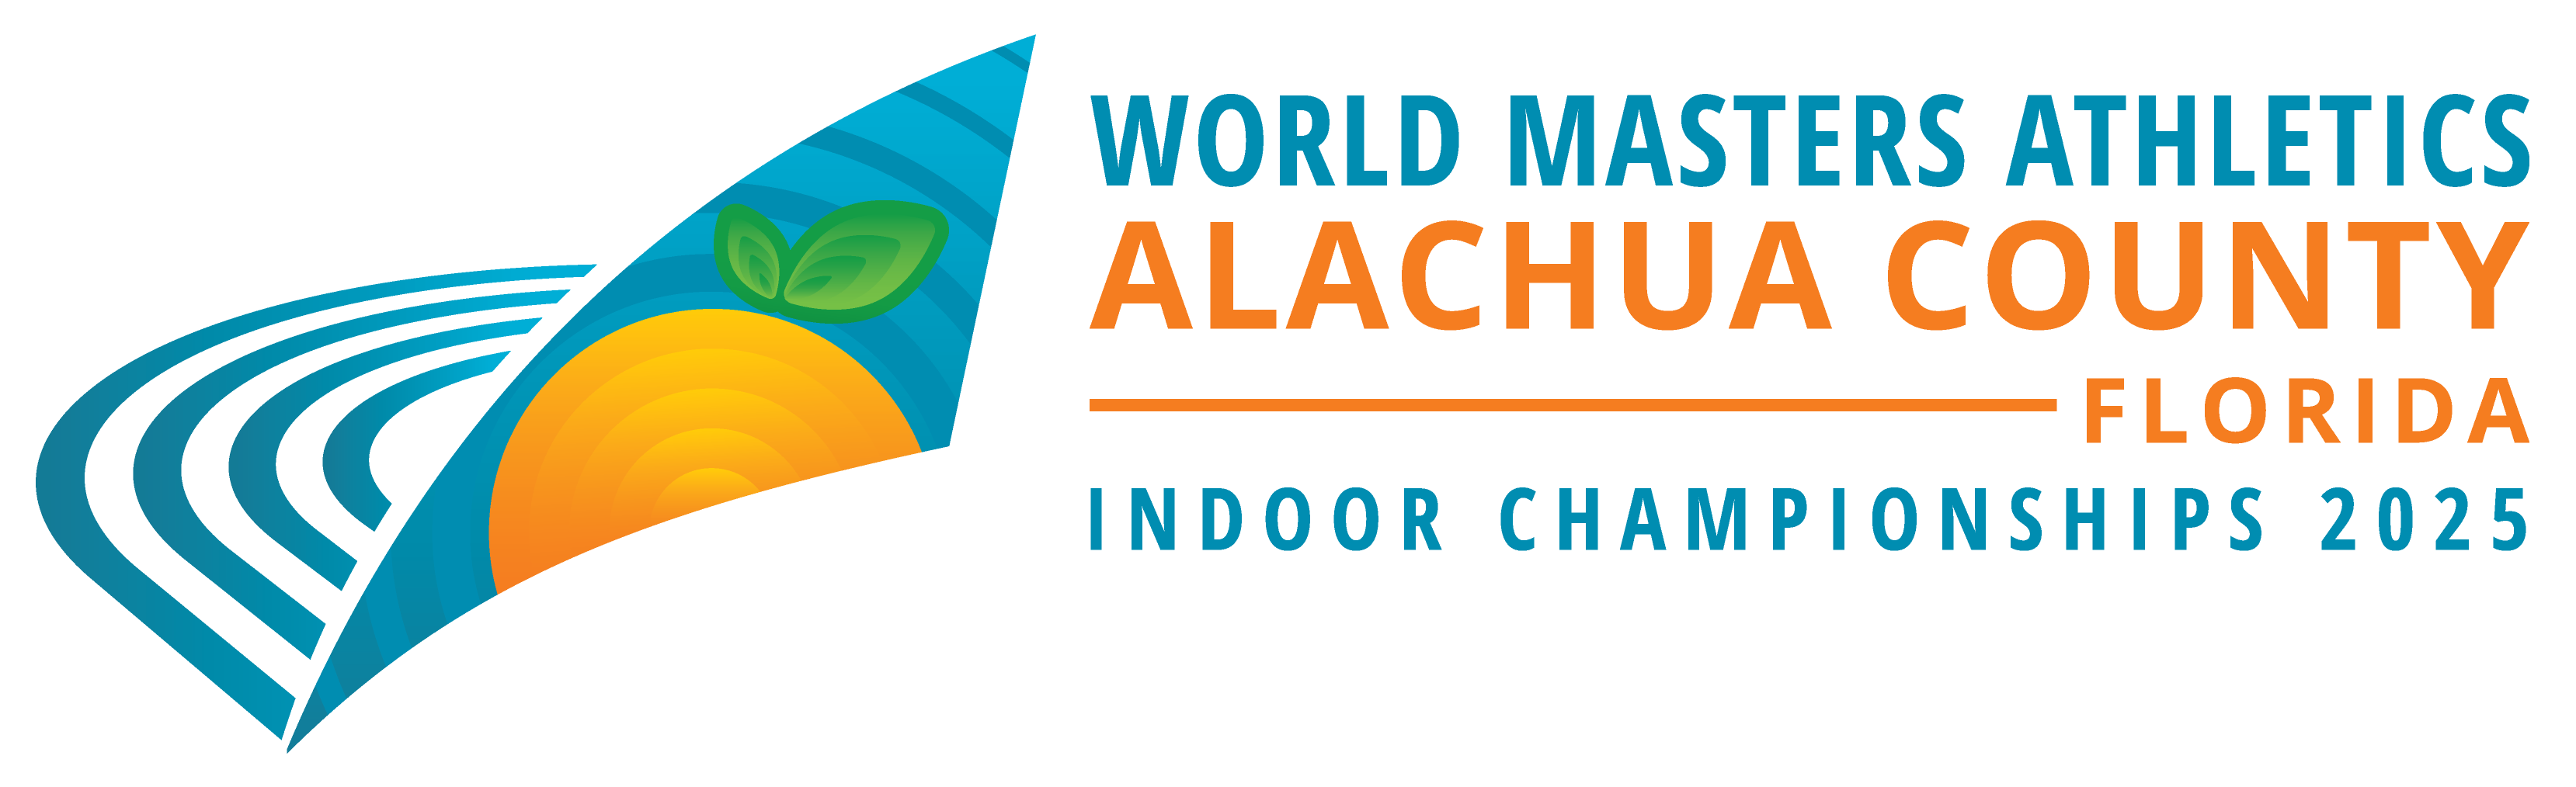 2025 World Masters Indoor Championships